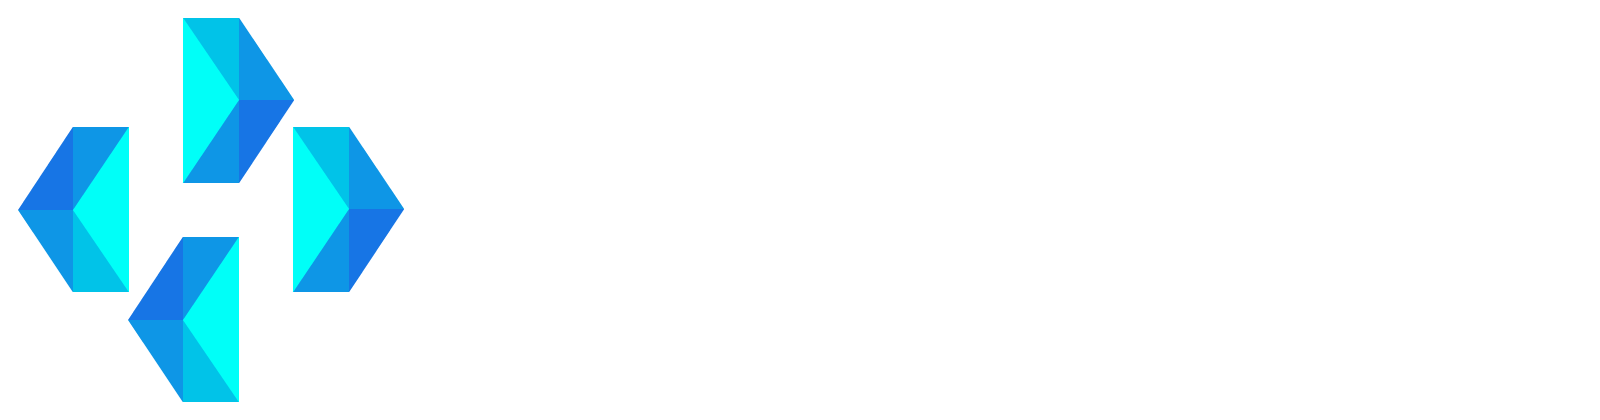 ItemHerald logo